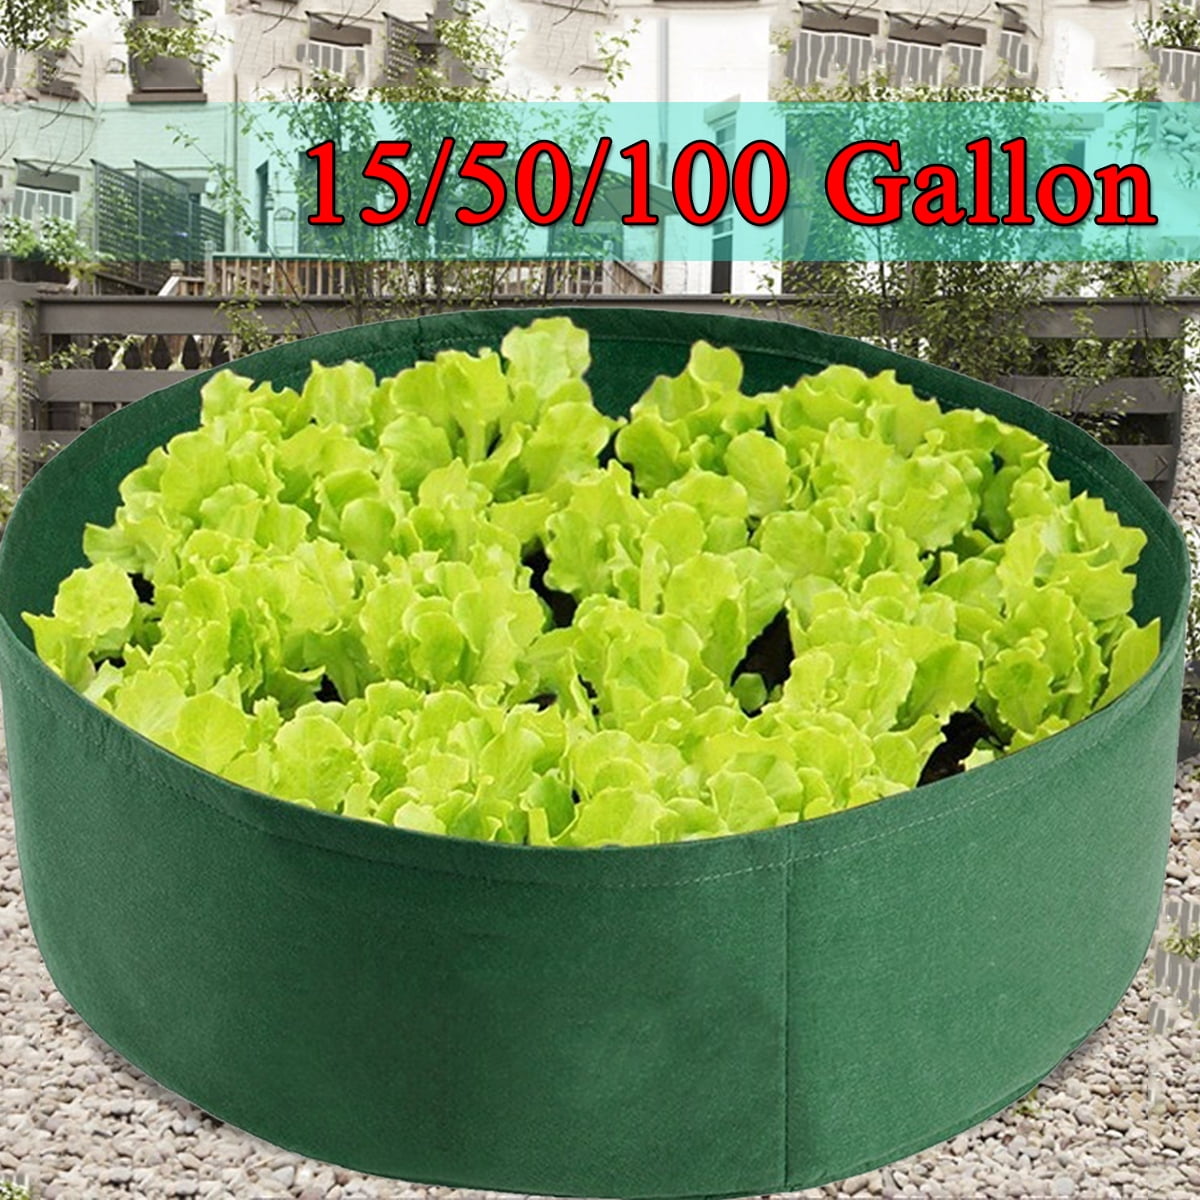 Fabric Raised Garden Bed 15/50/100 Gallons Planting Grow Bag Planter Nursery Pot